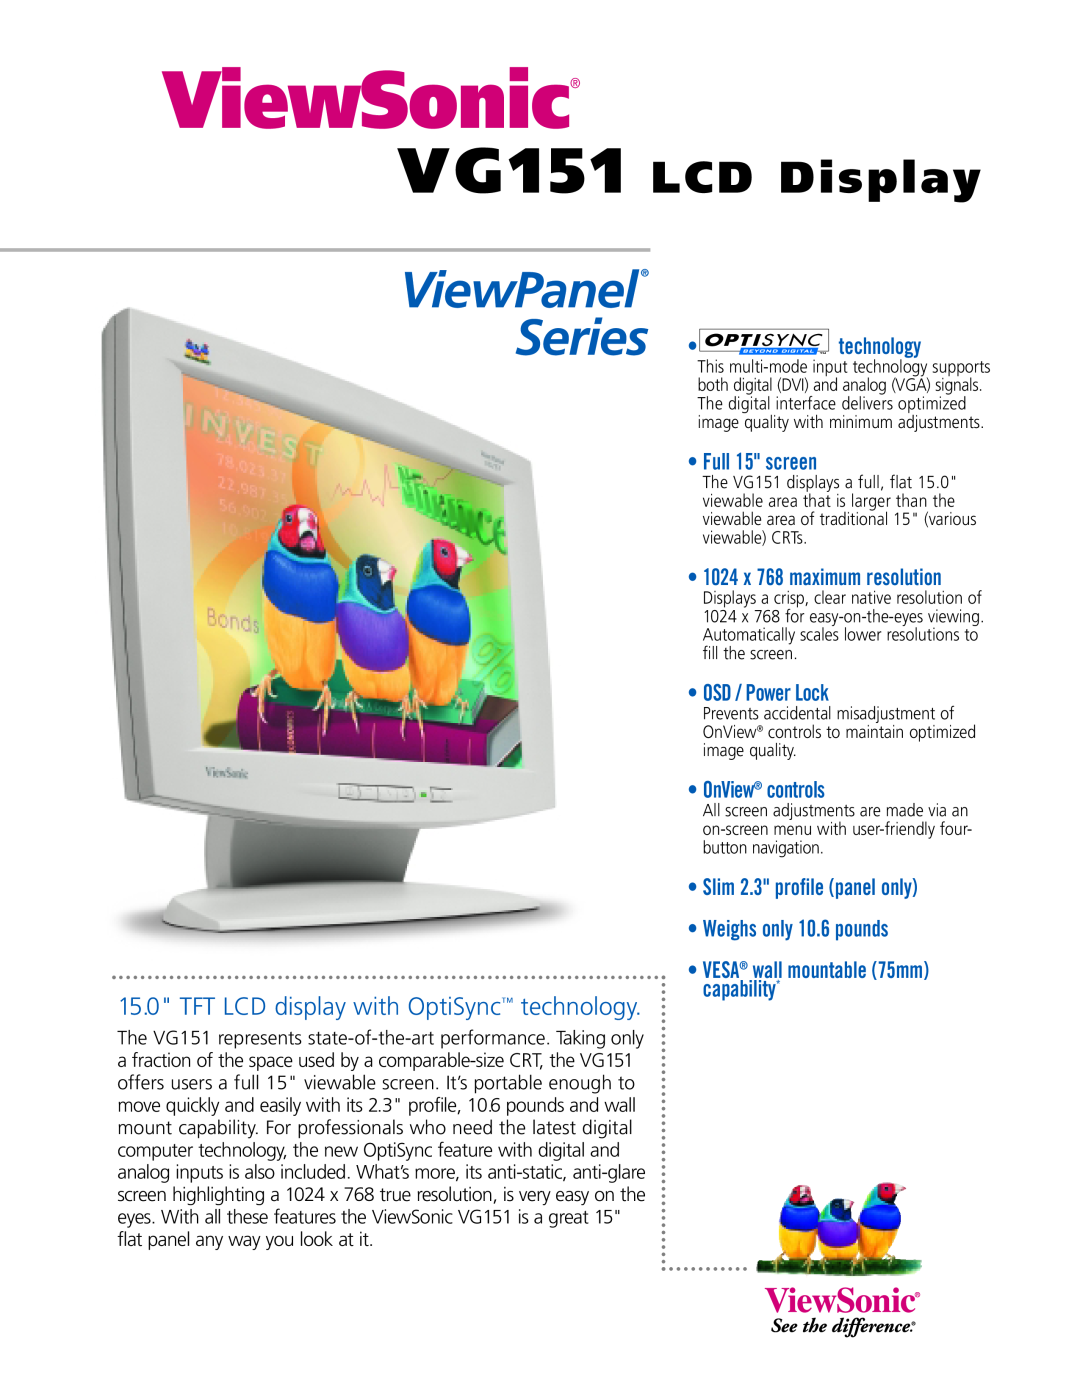 ViewSonic manual VG151 LCD Display, Full 15 screen, 1024 x 768 maximum resolution, OSD / Power Lock, OnView controls 